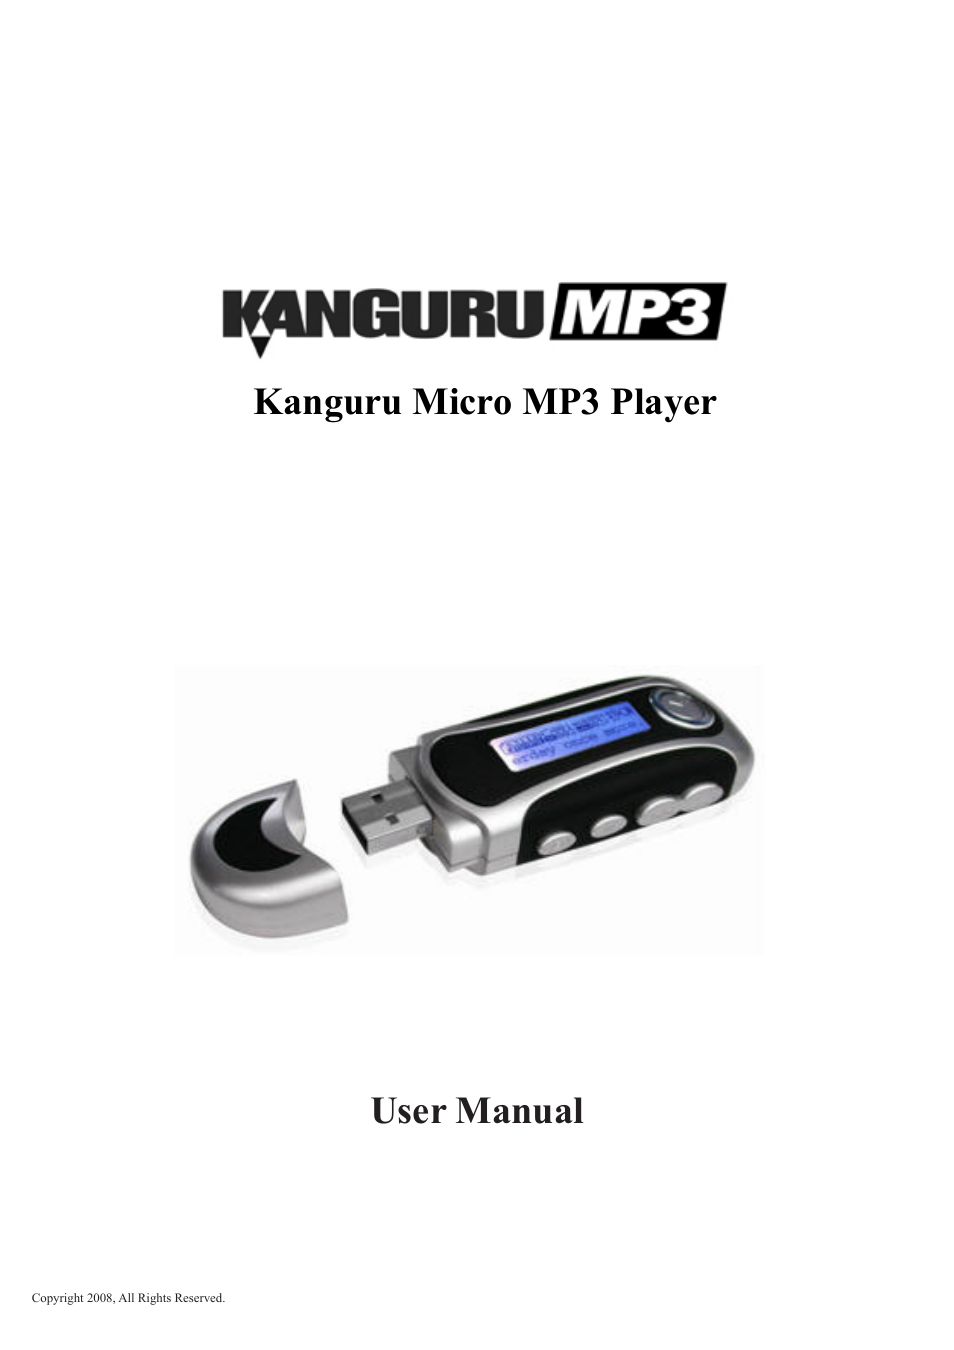 Kanguru MP3 v3 User Manual | 14 pages